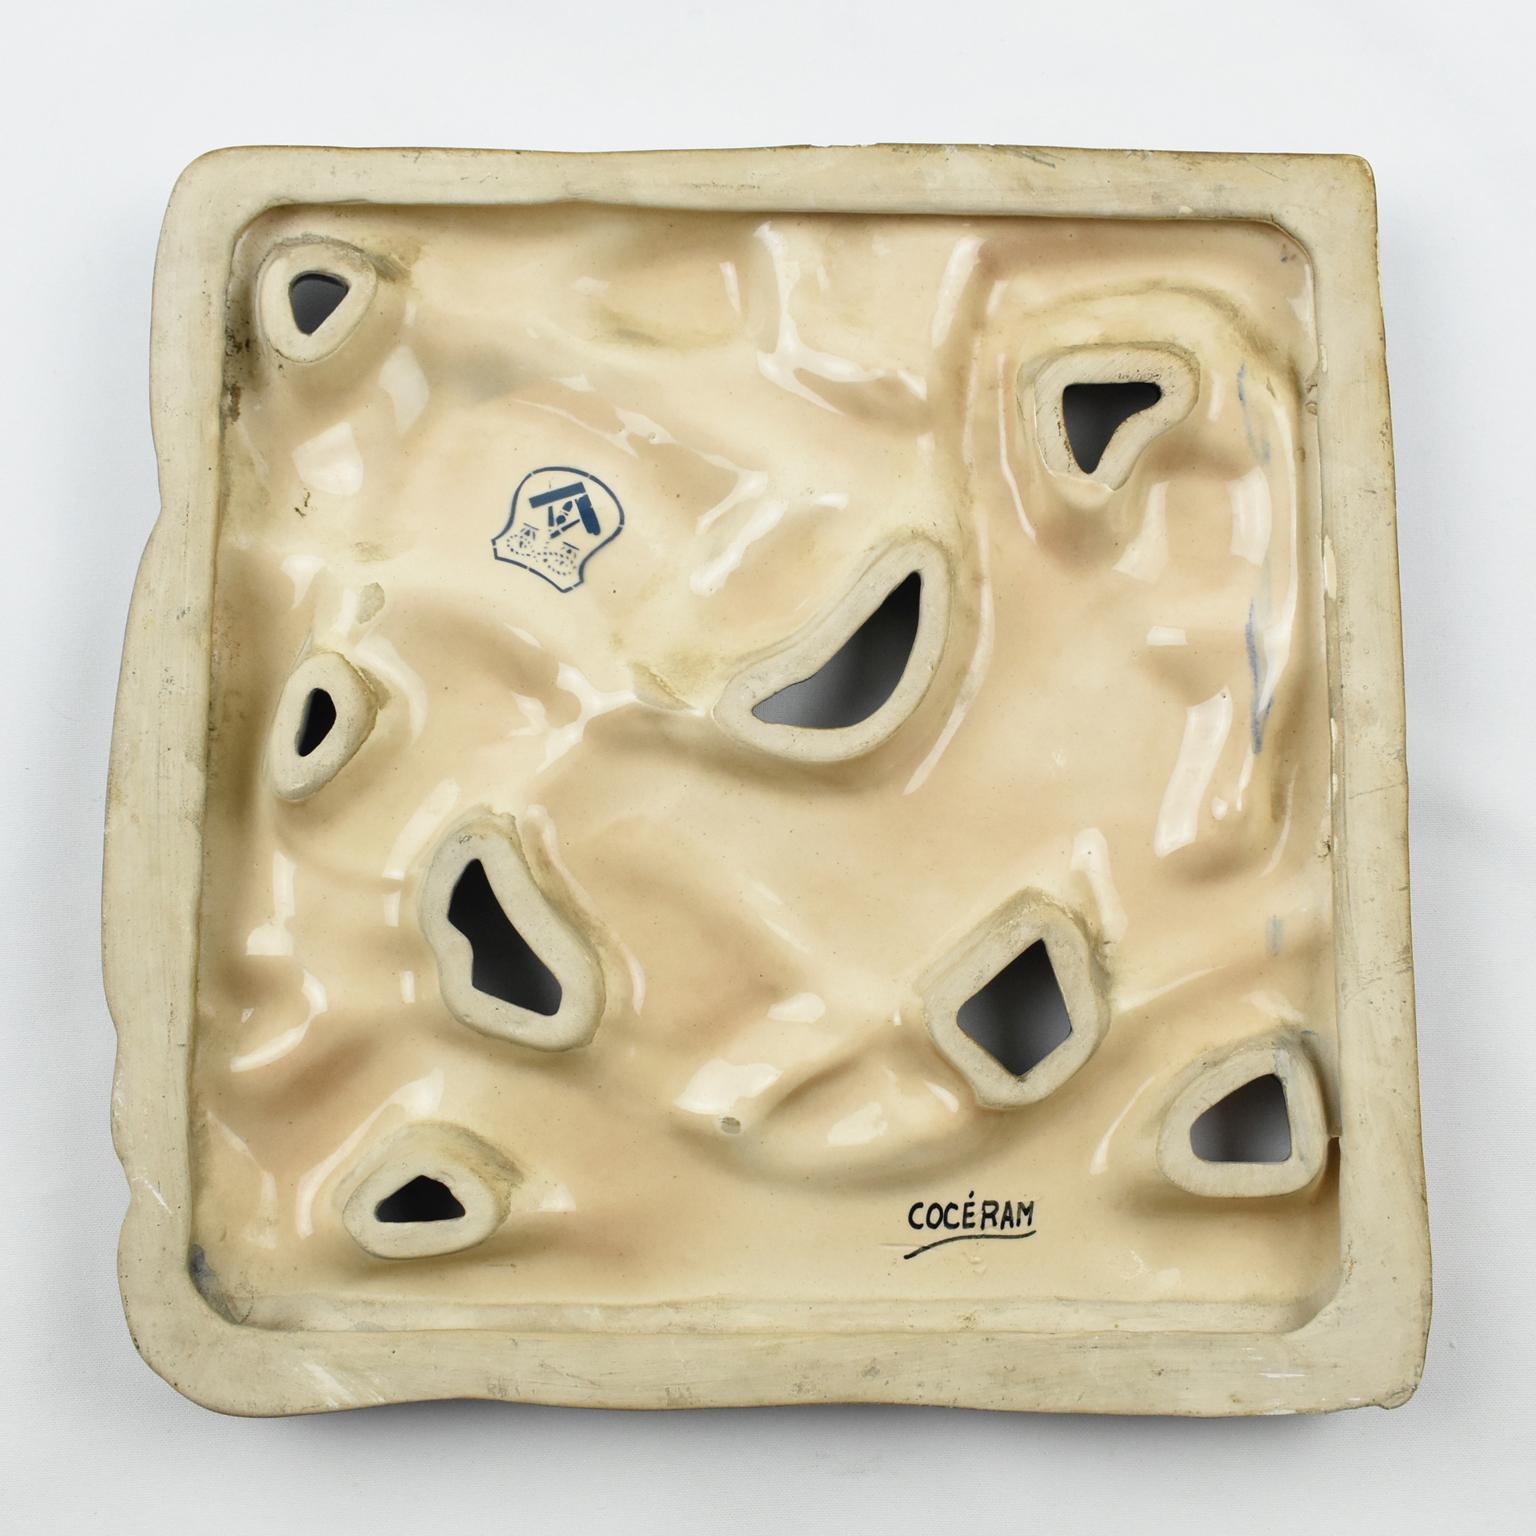 Rene Boschmans for Coceram Cubist Ceramic Tile Sculpture with Masonic Sign, 3pc For Sale 8